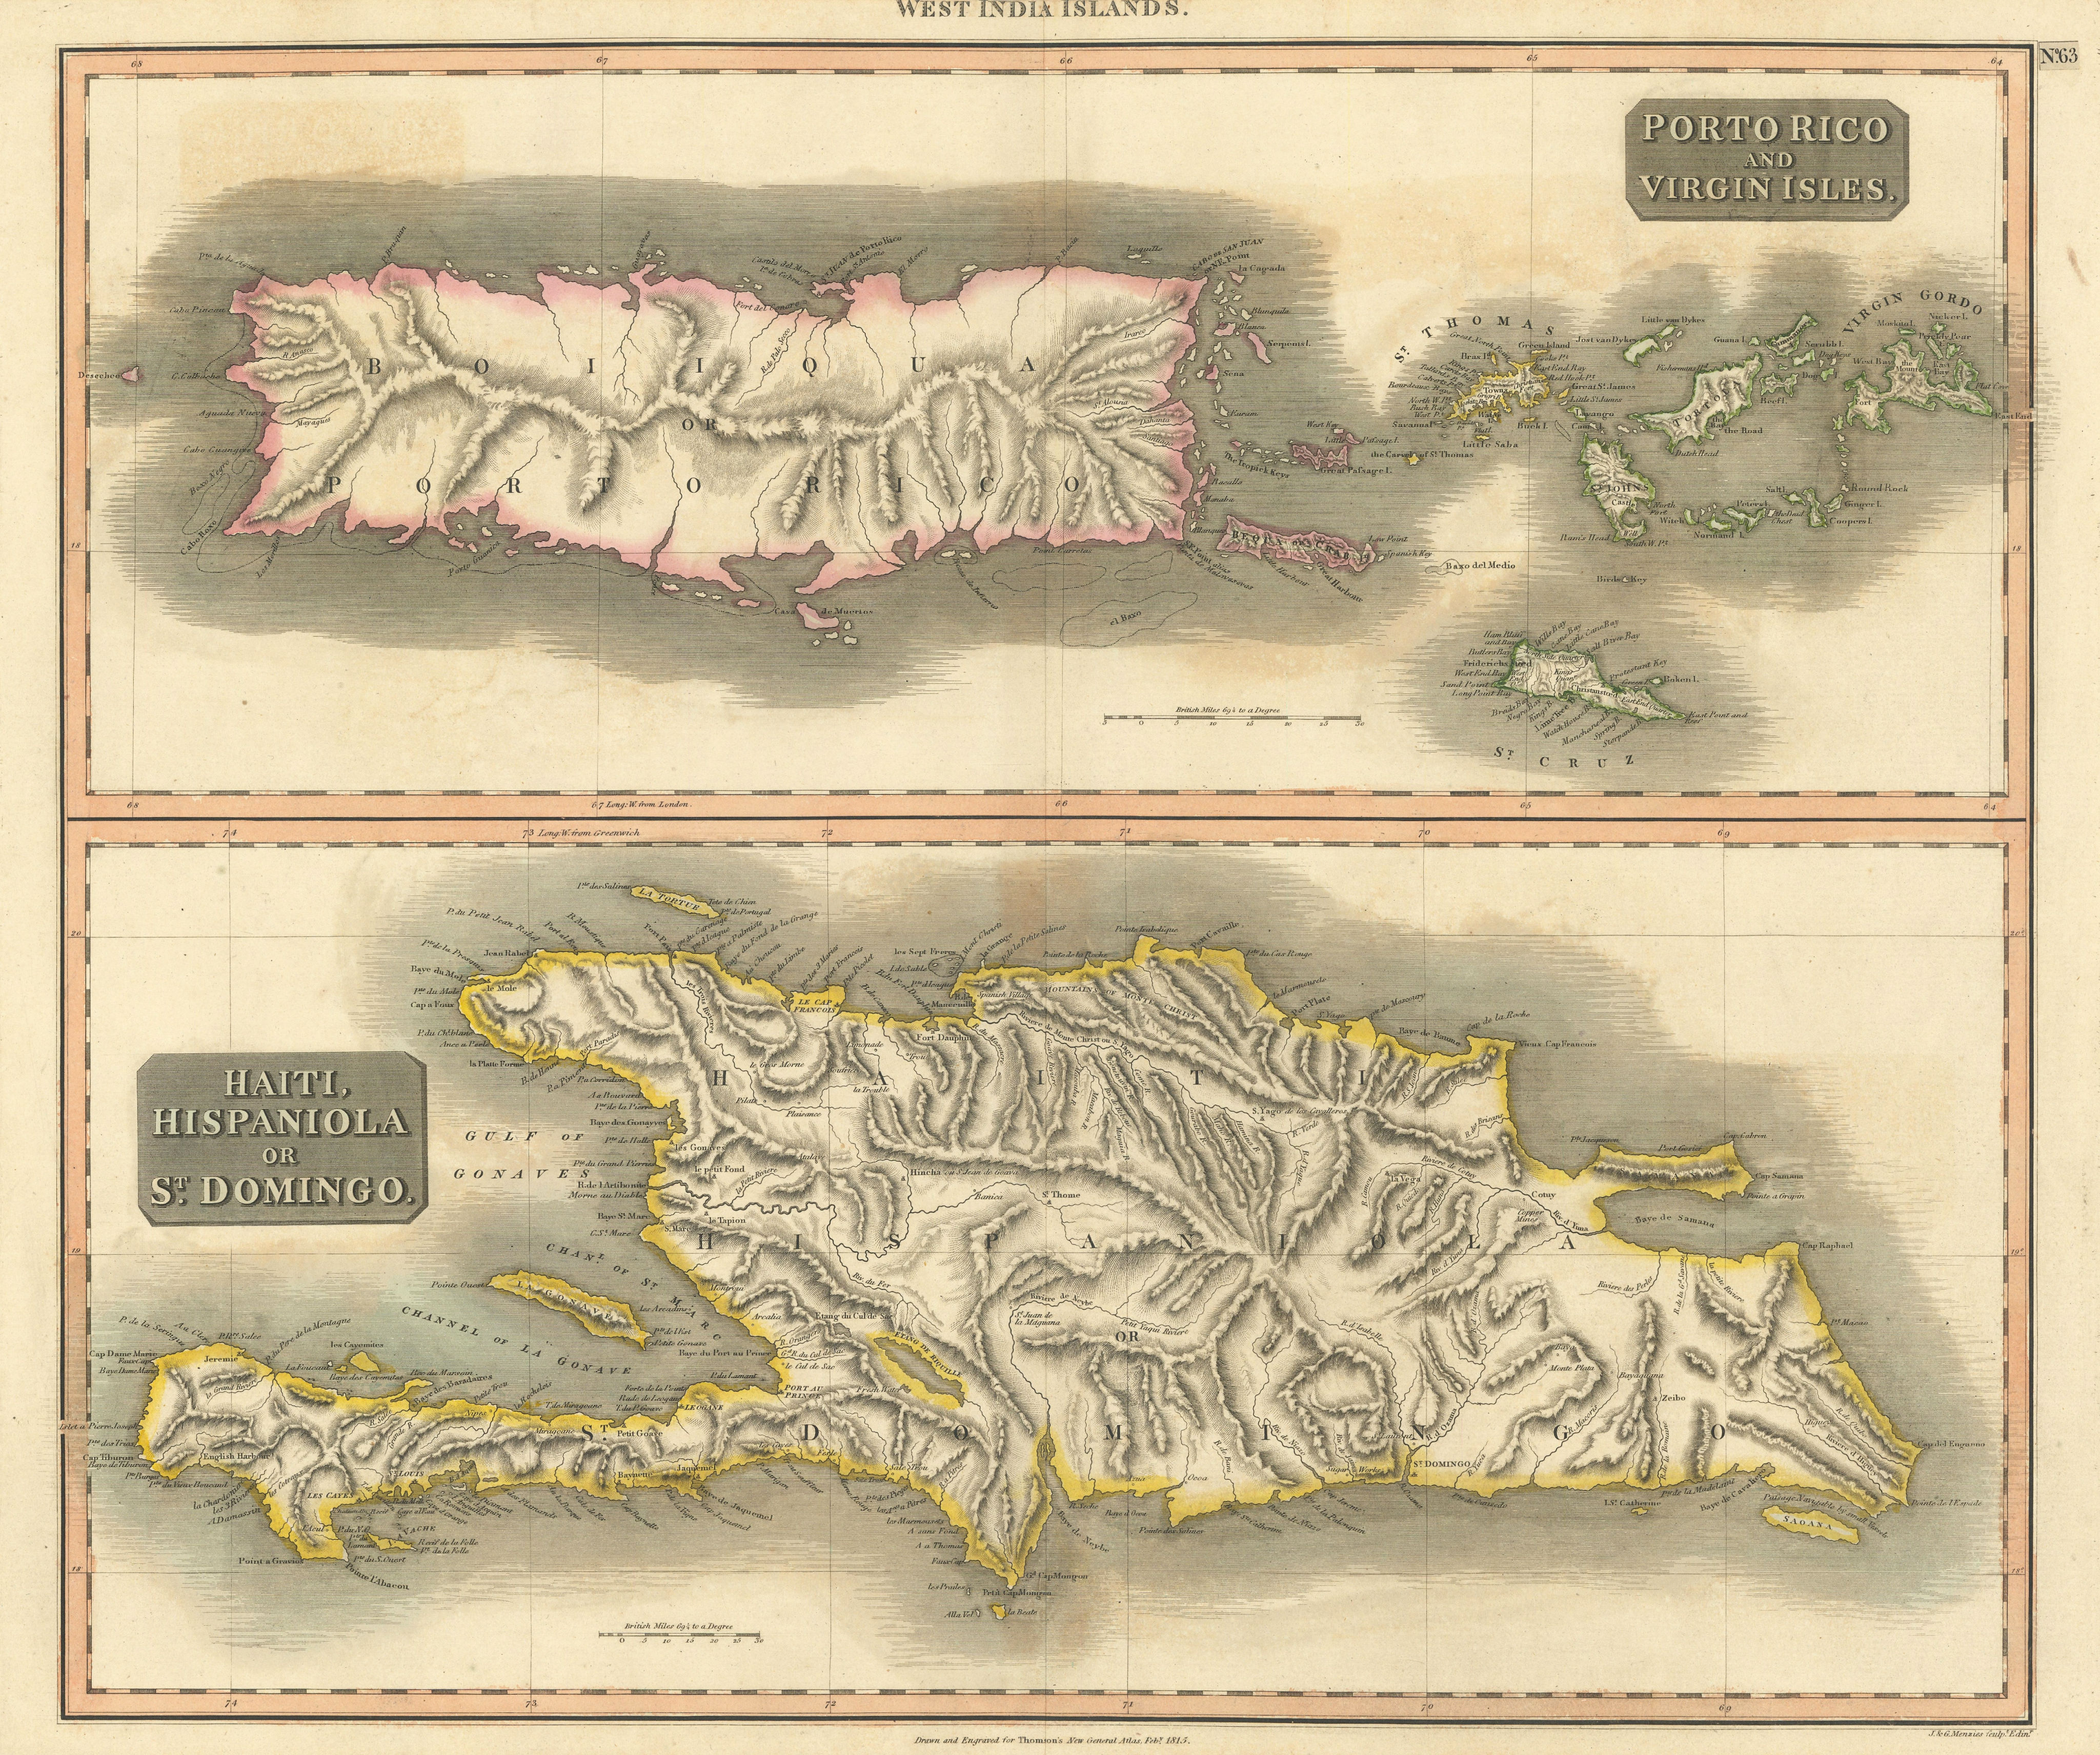 Puerto Rico & Virgin Islands. Haiti, Hispaniola or St. Domingo. THOMSON 1817 map